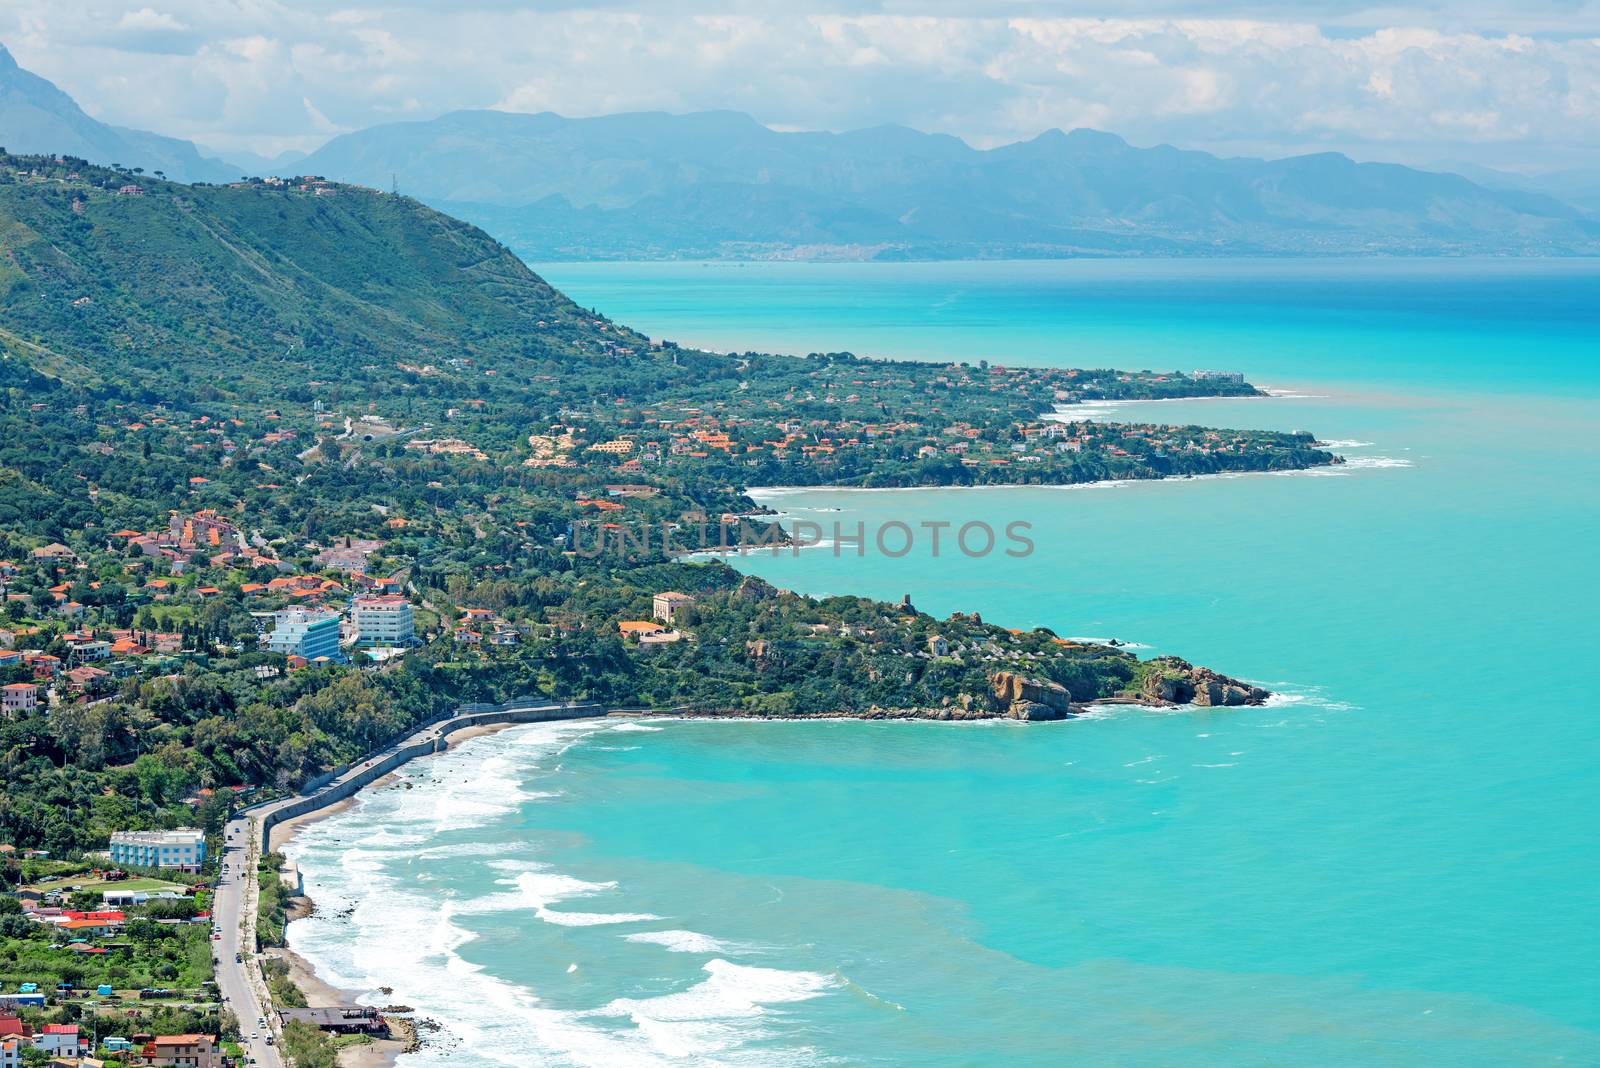 Aerial panoramic view of town Cefalu by Nanisimova